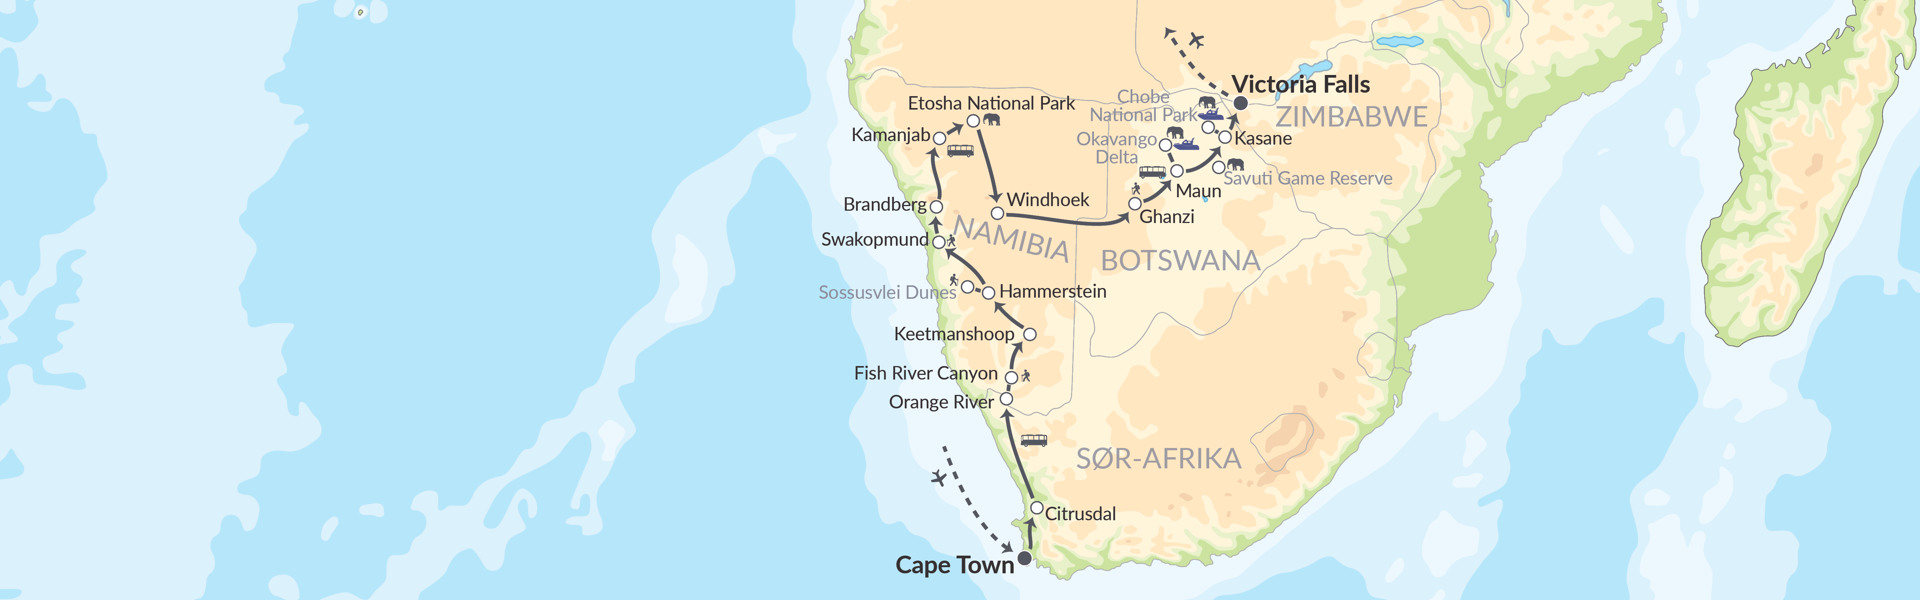 9862 Namibia, Botswana & Victoria Falls